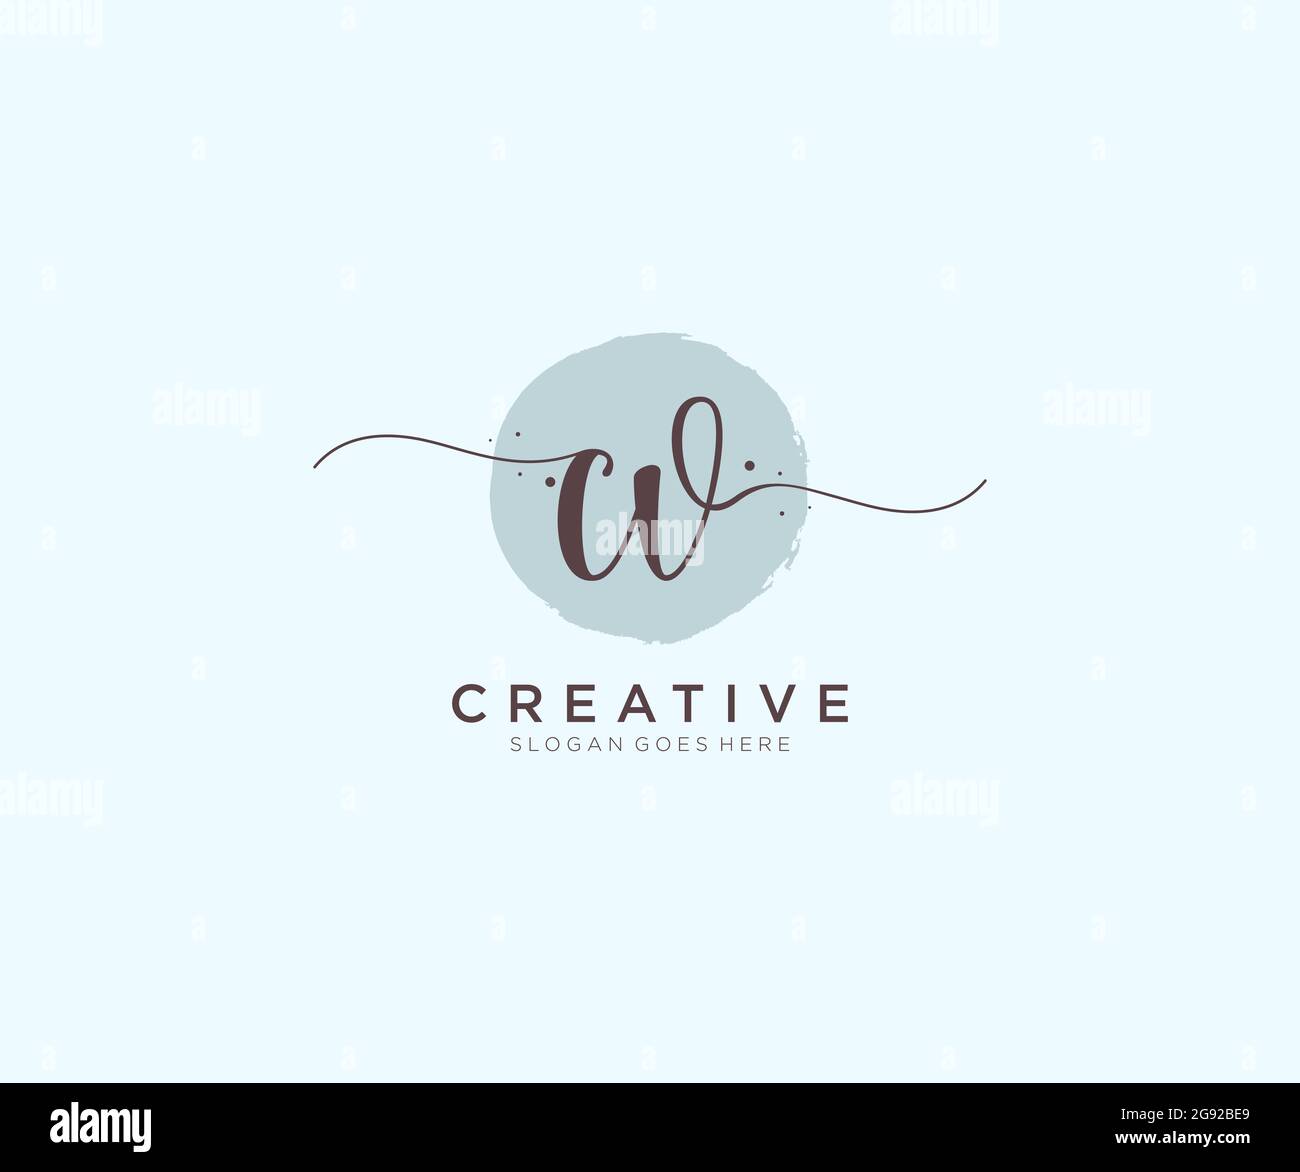 CV Feminine logo beauty monogram and elegant logo design, handwriting logo of initial signature, wedding, fashion, floral and botanical with creative Stock Vector